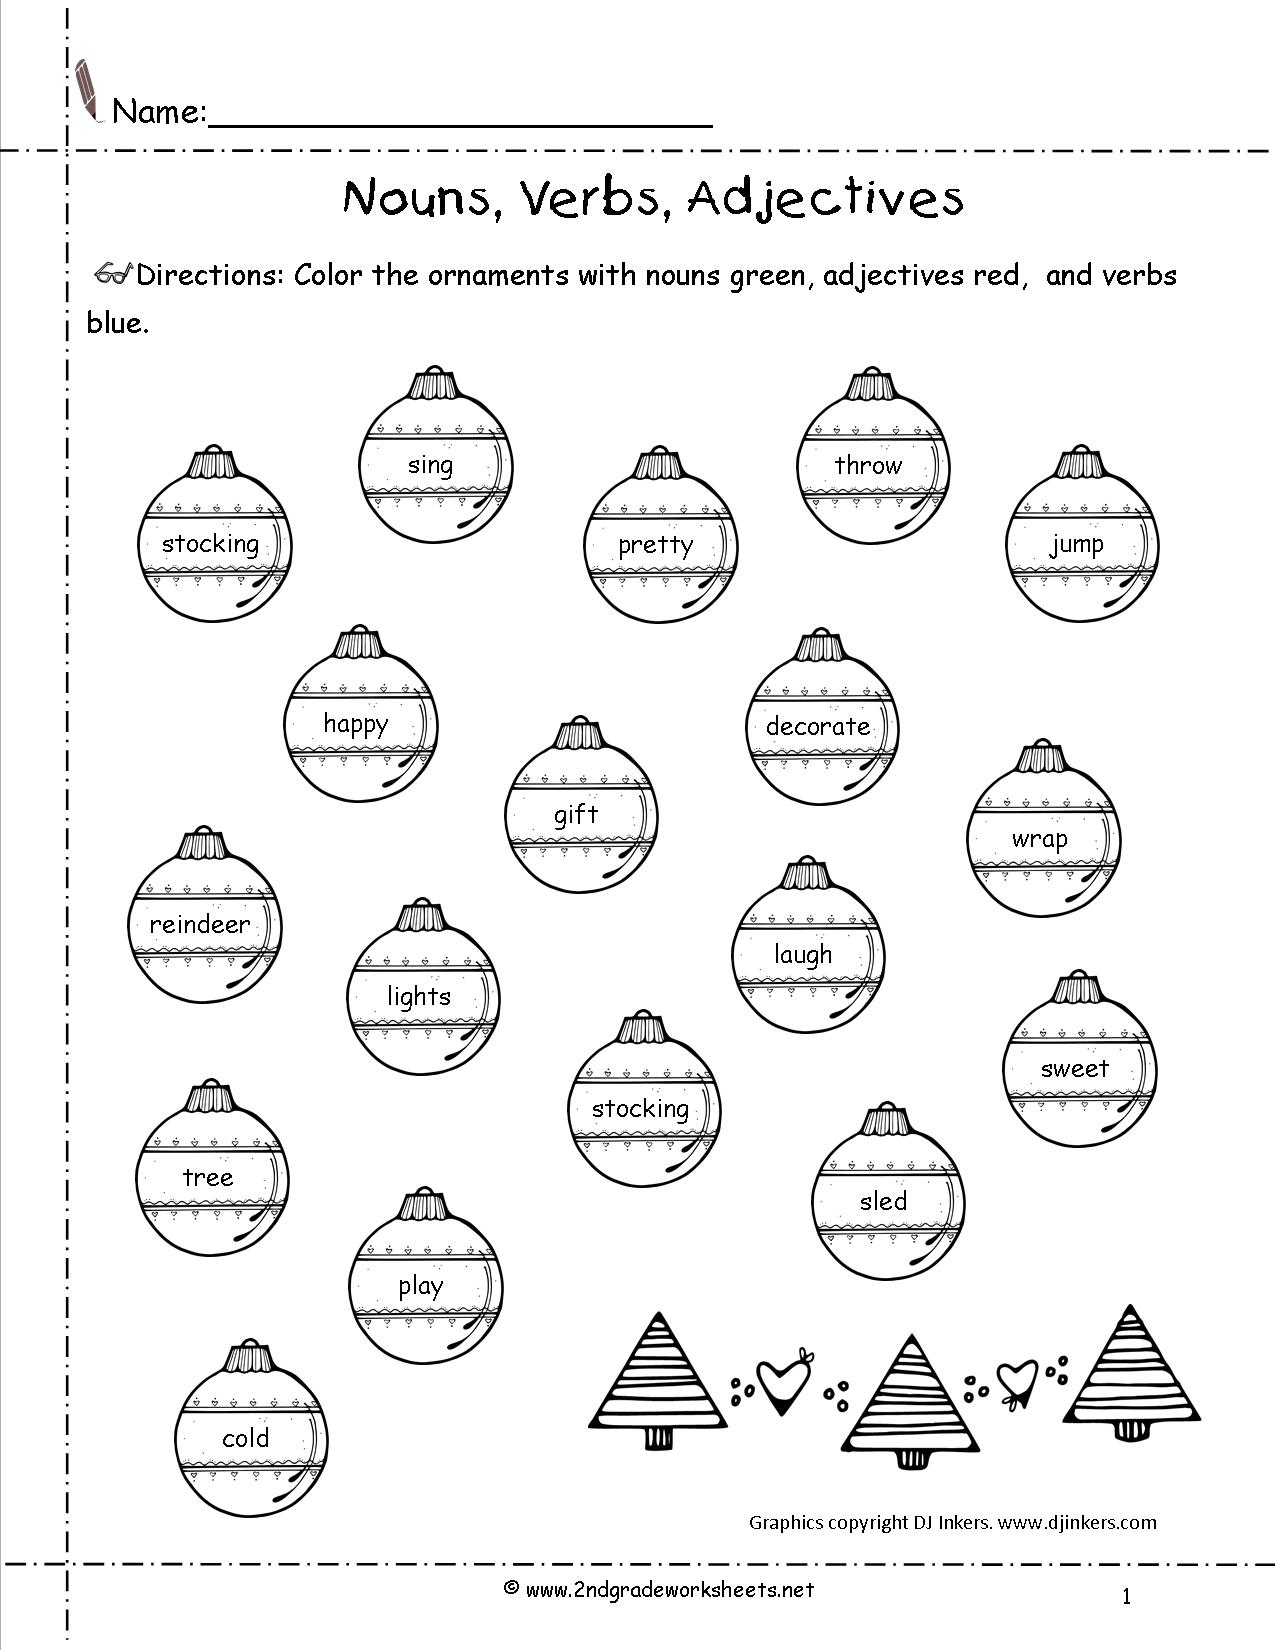 15-best-images-of-noun-coloring-worksheets-printable-noun-worksheets-grade-1-collective-nouns